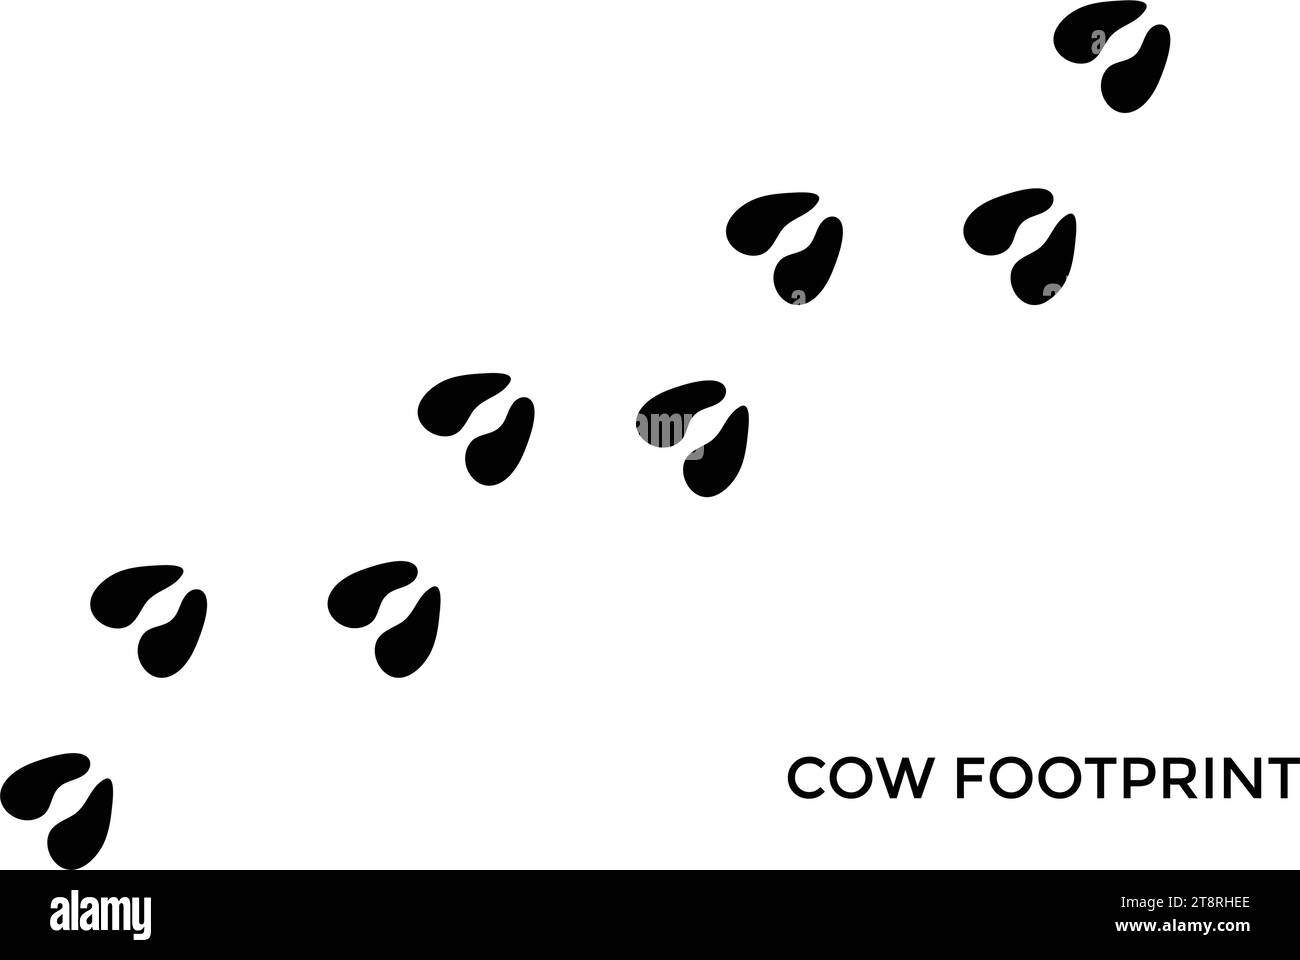 bull footprint icon on light background Stock Vector